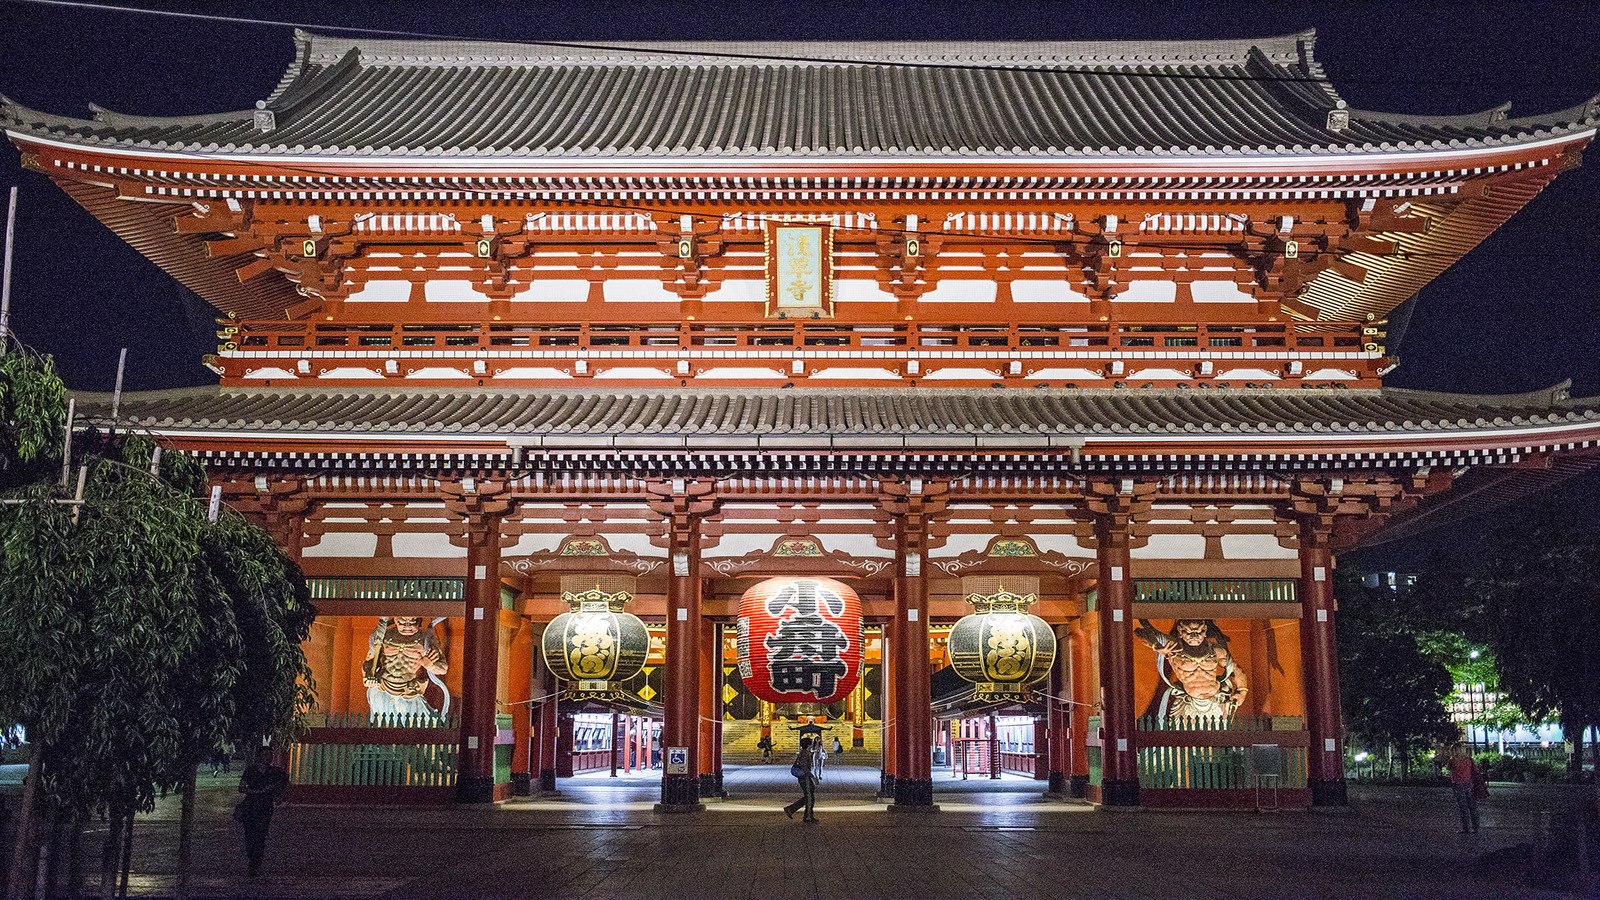 InsideJapan ToursTokyoSensoji templeAsakusa